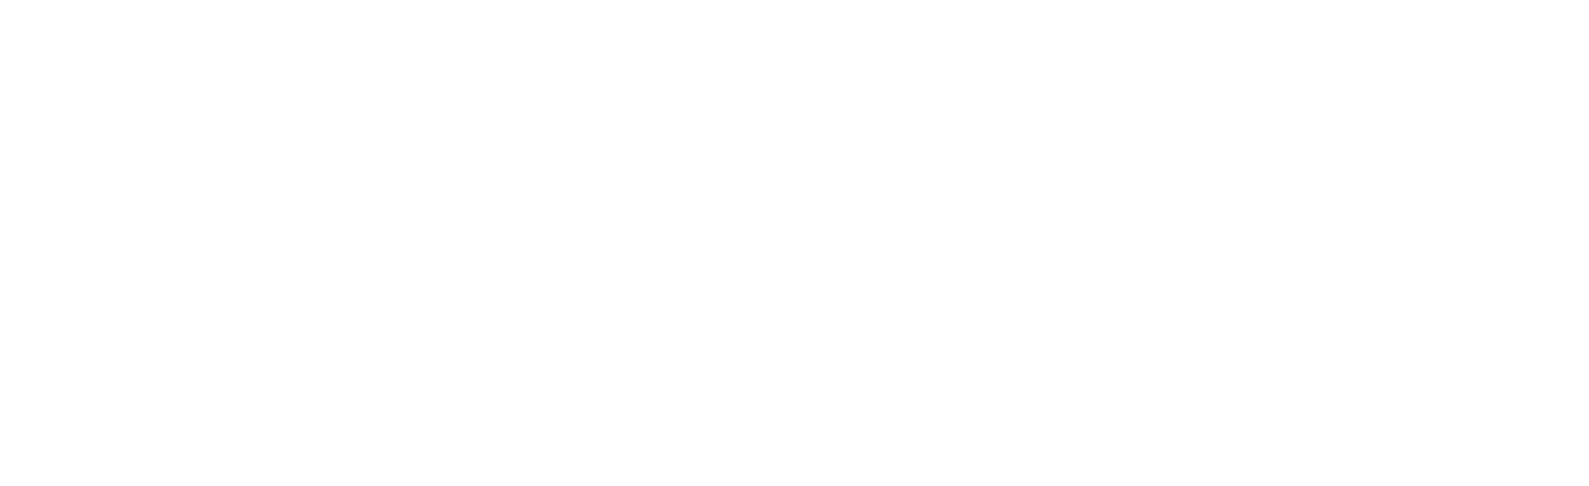 Estun Automation logo large for dark backgrounds (transparent PNG)